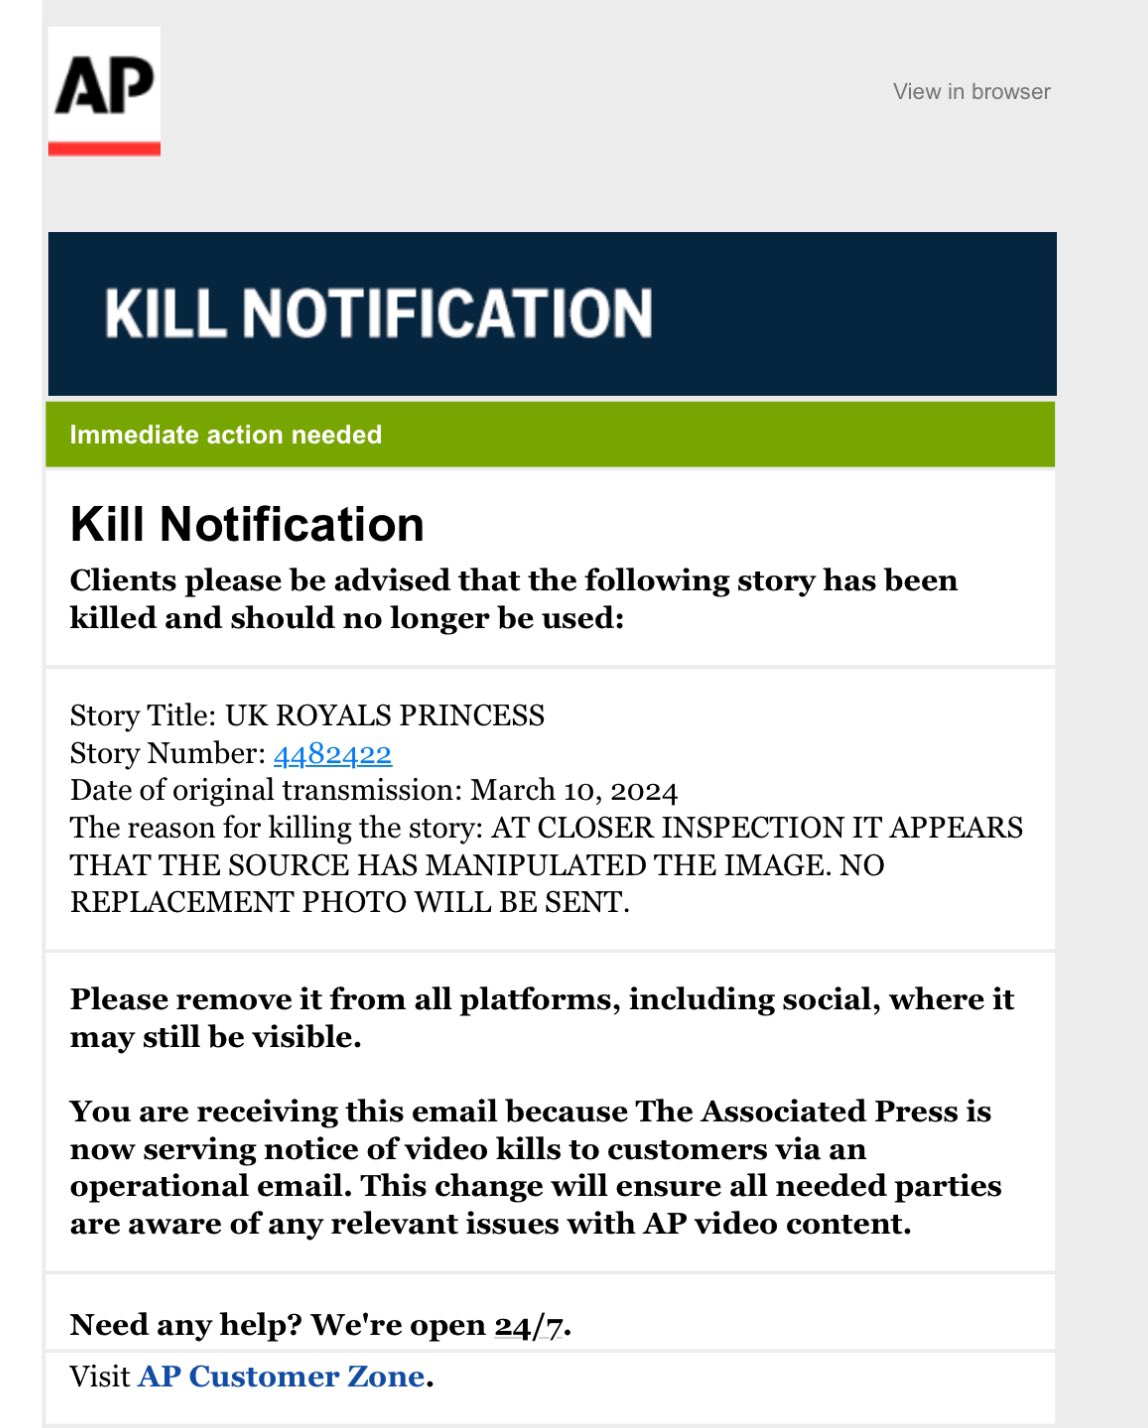 An online 'kill notification' from news agency AP regarding a story called 'UK ROYALS PRINCESS'